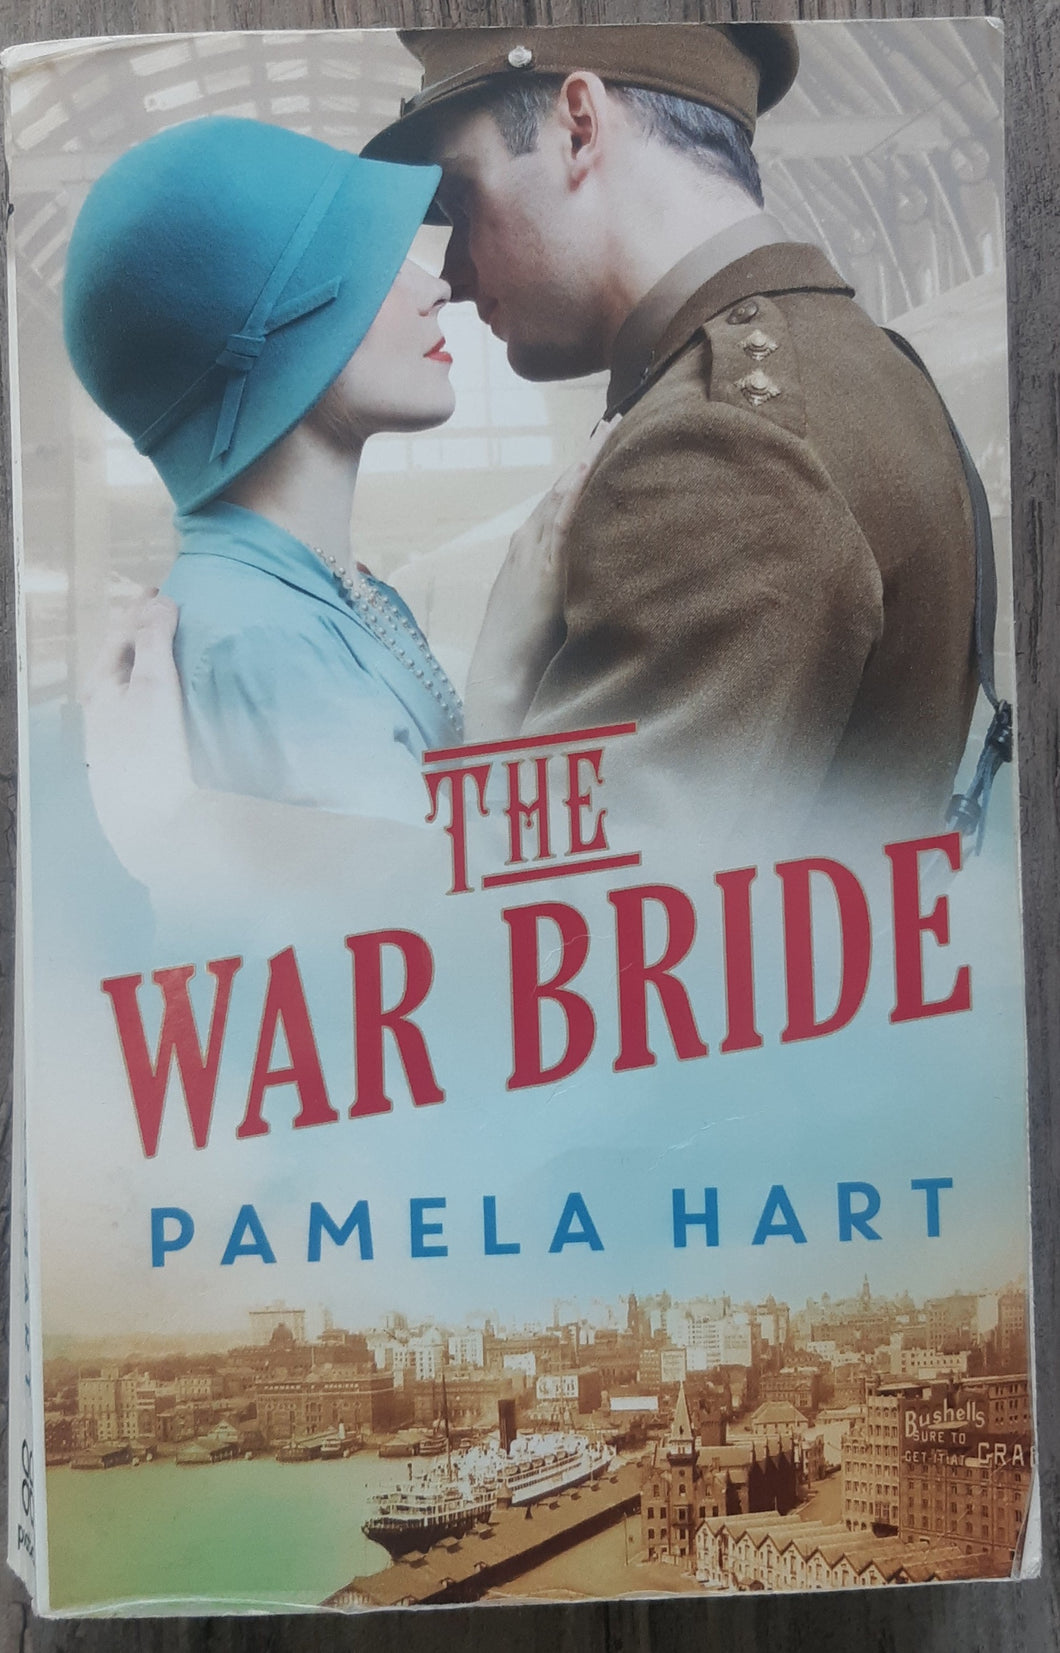 The War Bride by Pamela Hart